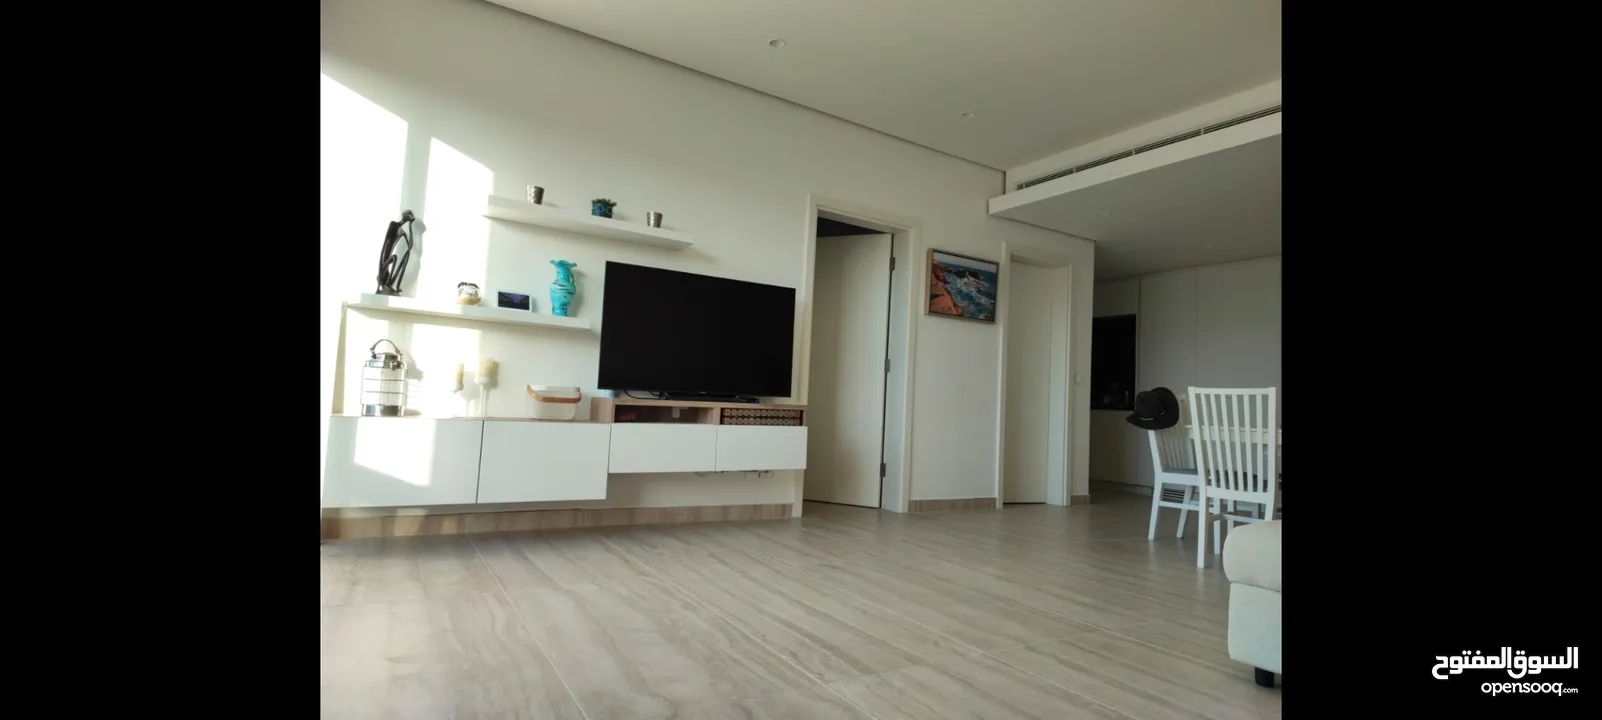 Ground Floor - One Bedroom Apartment in Ayla 85sqm + 25 sqm terrace